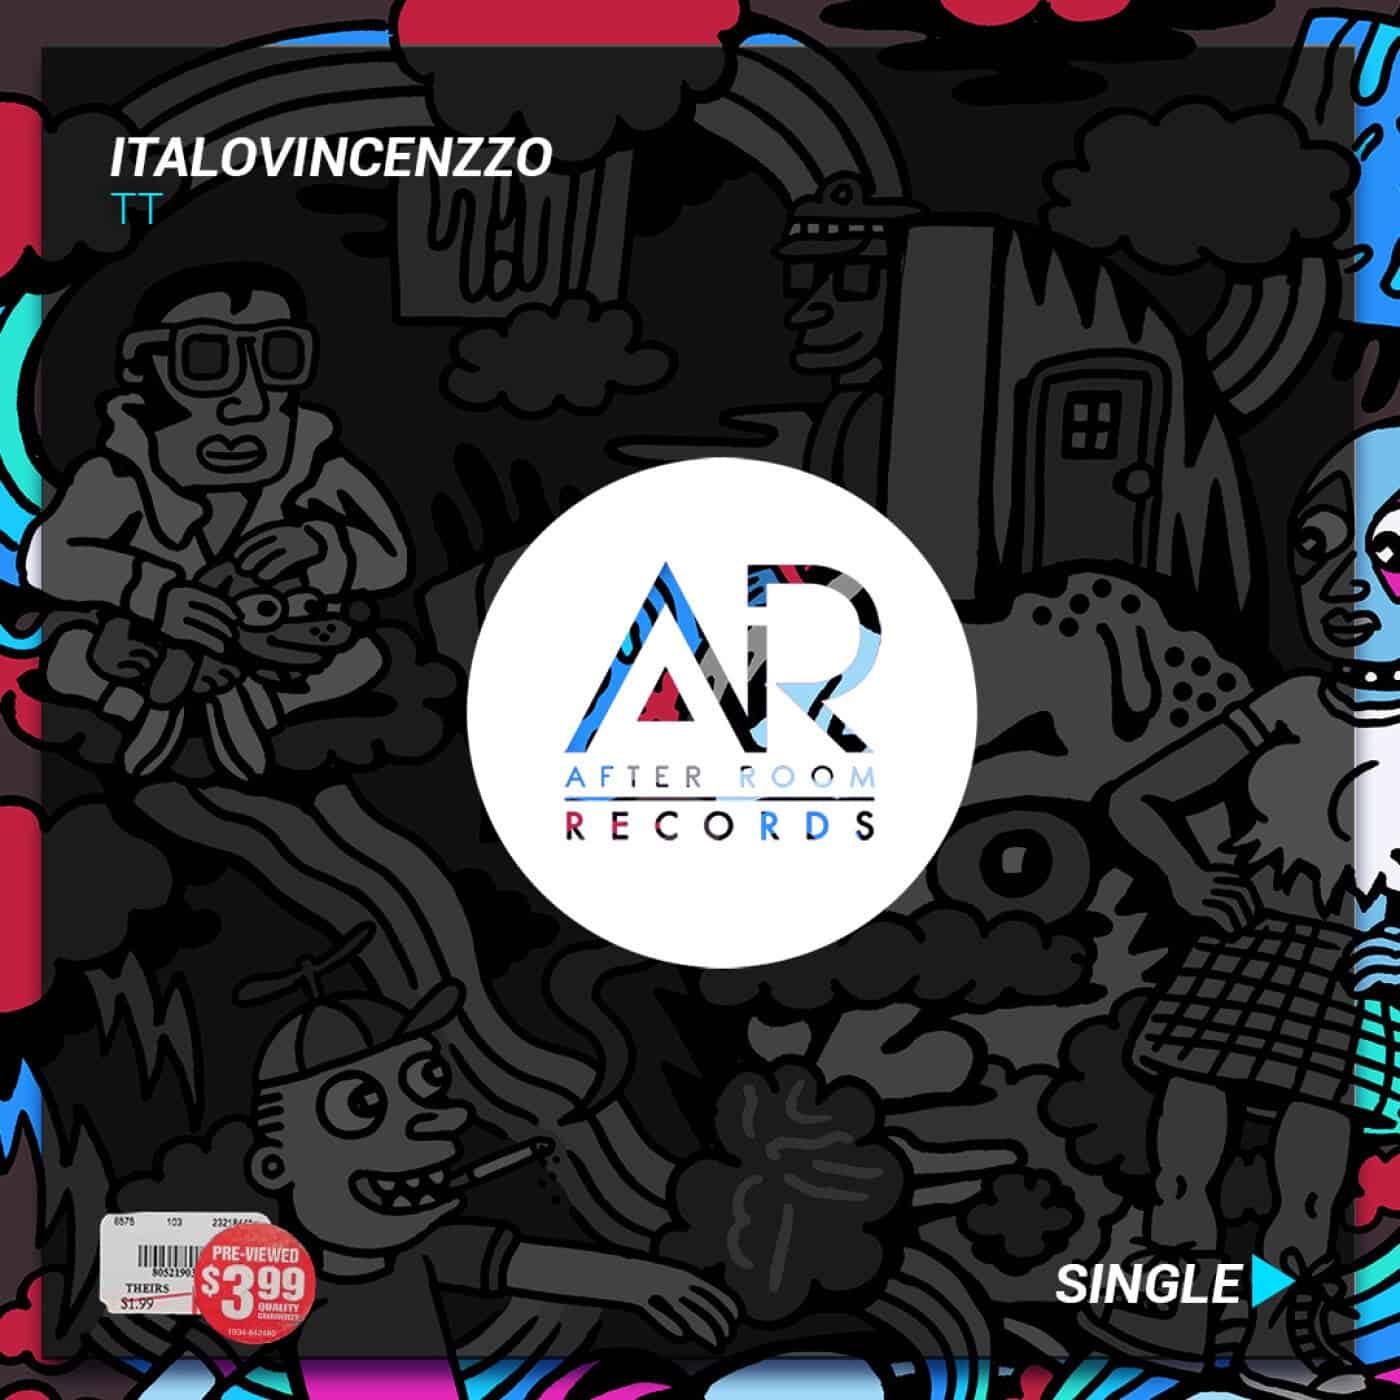 Download ItaloVincenzzo - TT on Electrobuzz